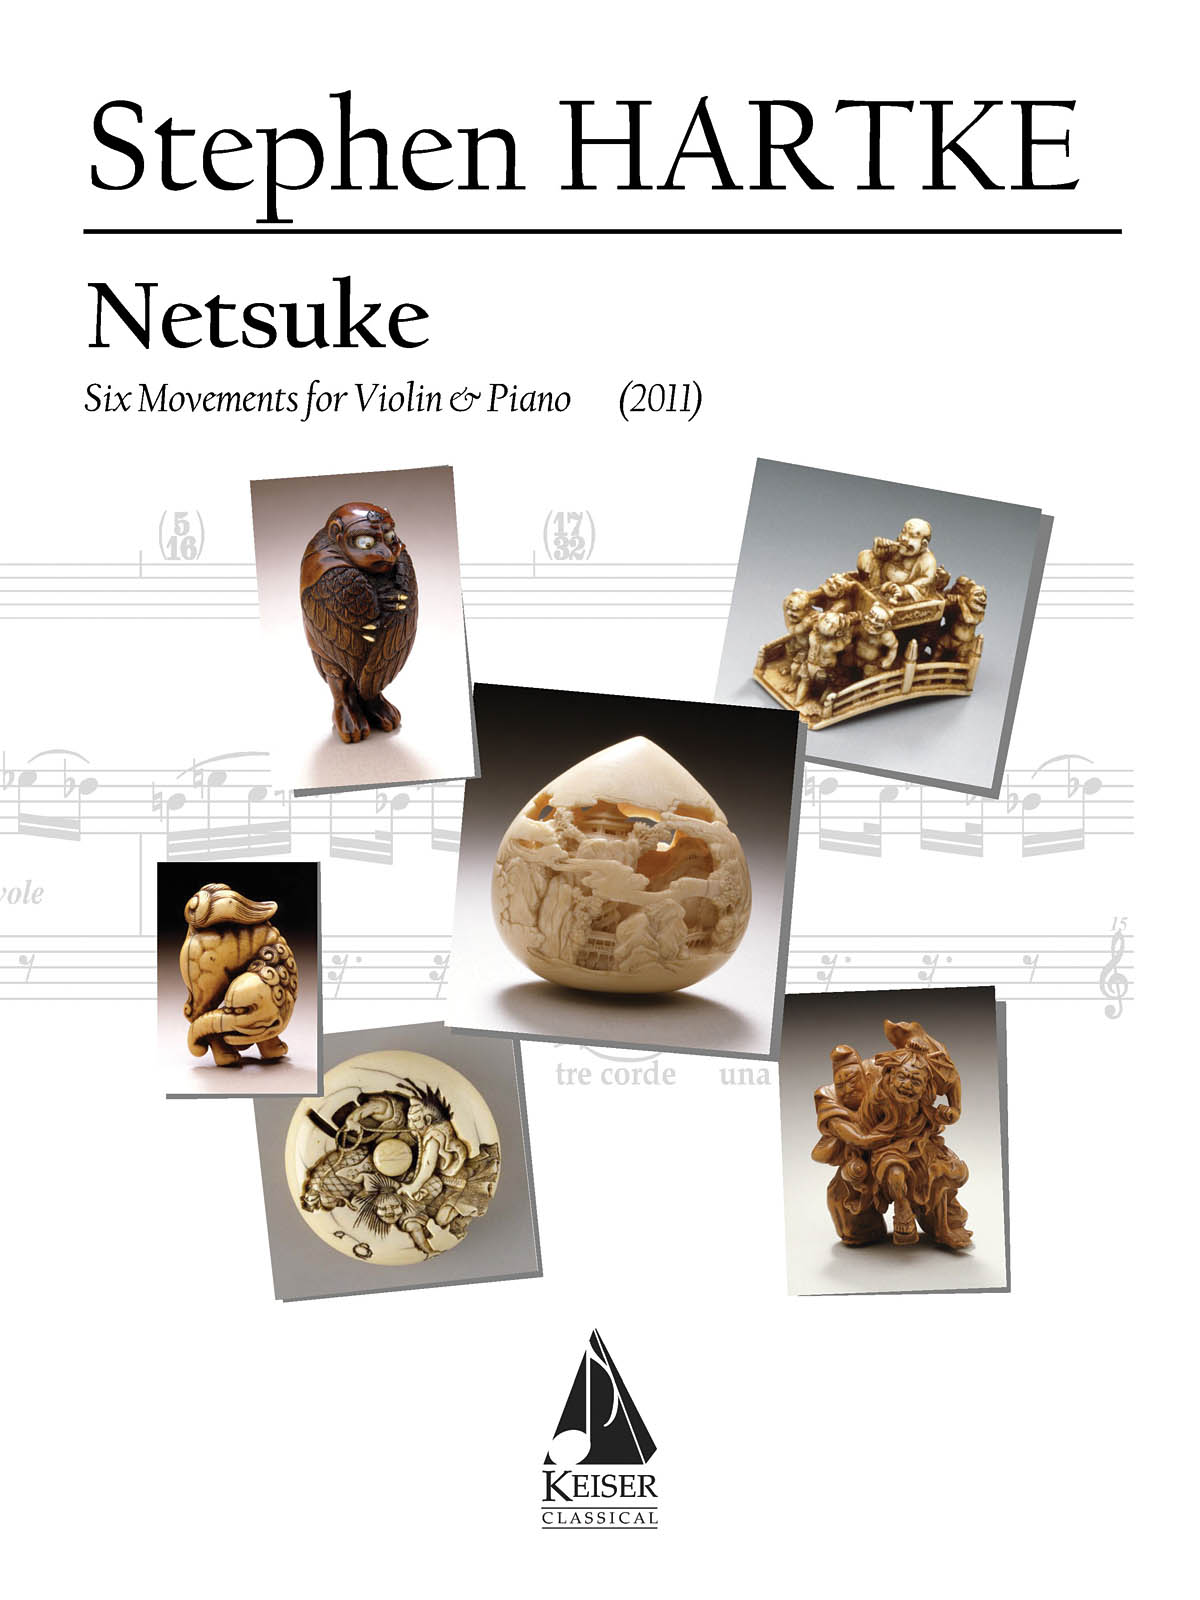 Netsuke: Six Movements for Violin and Pno